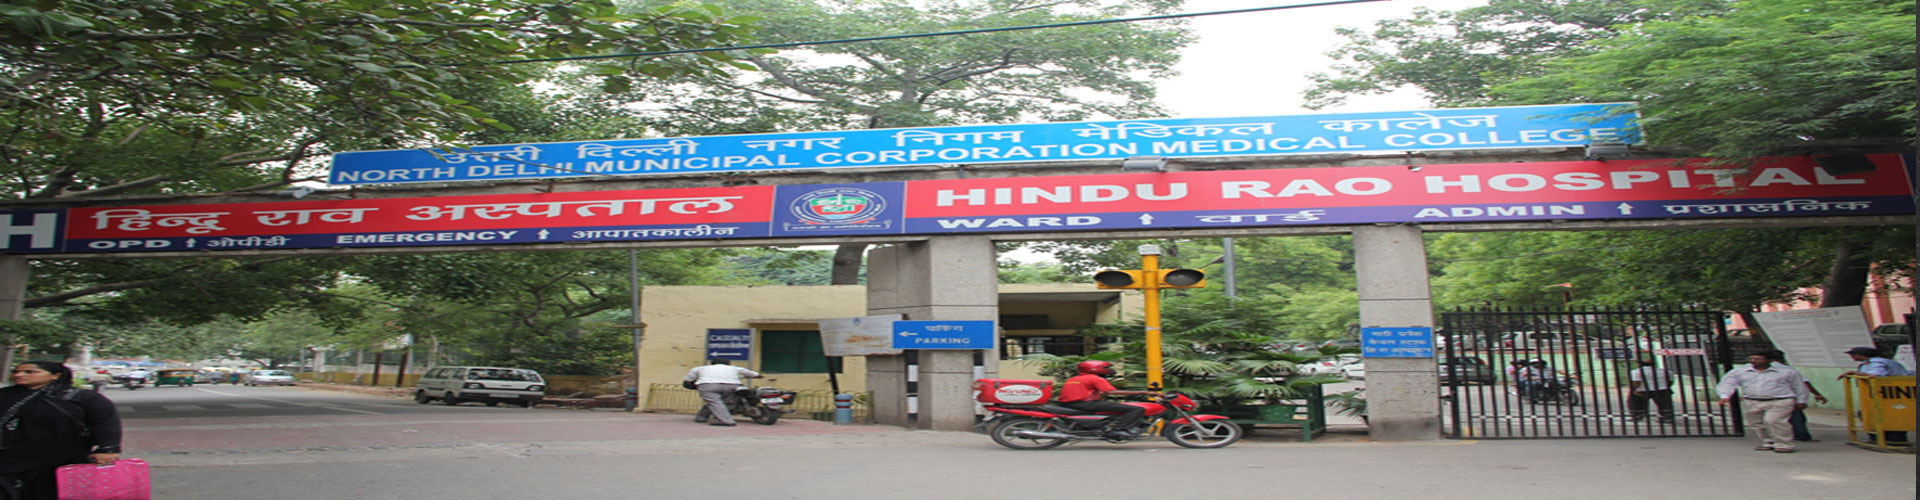 NDMC Medical College, Delhi